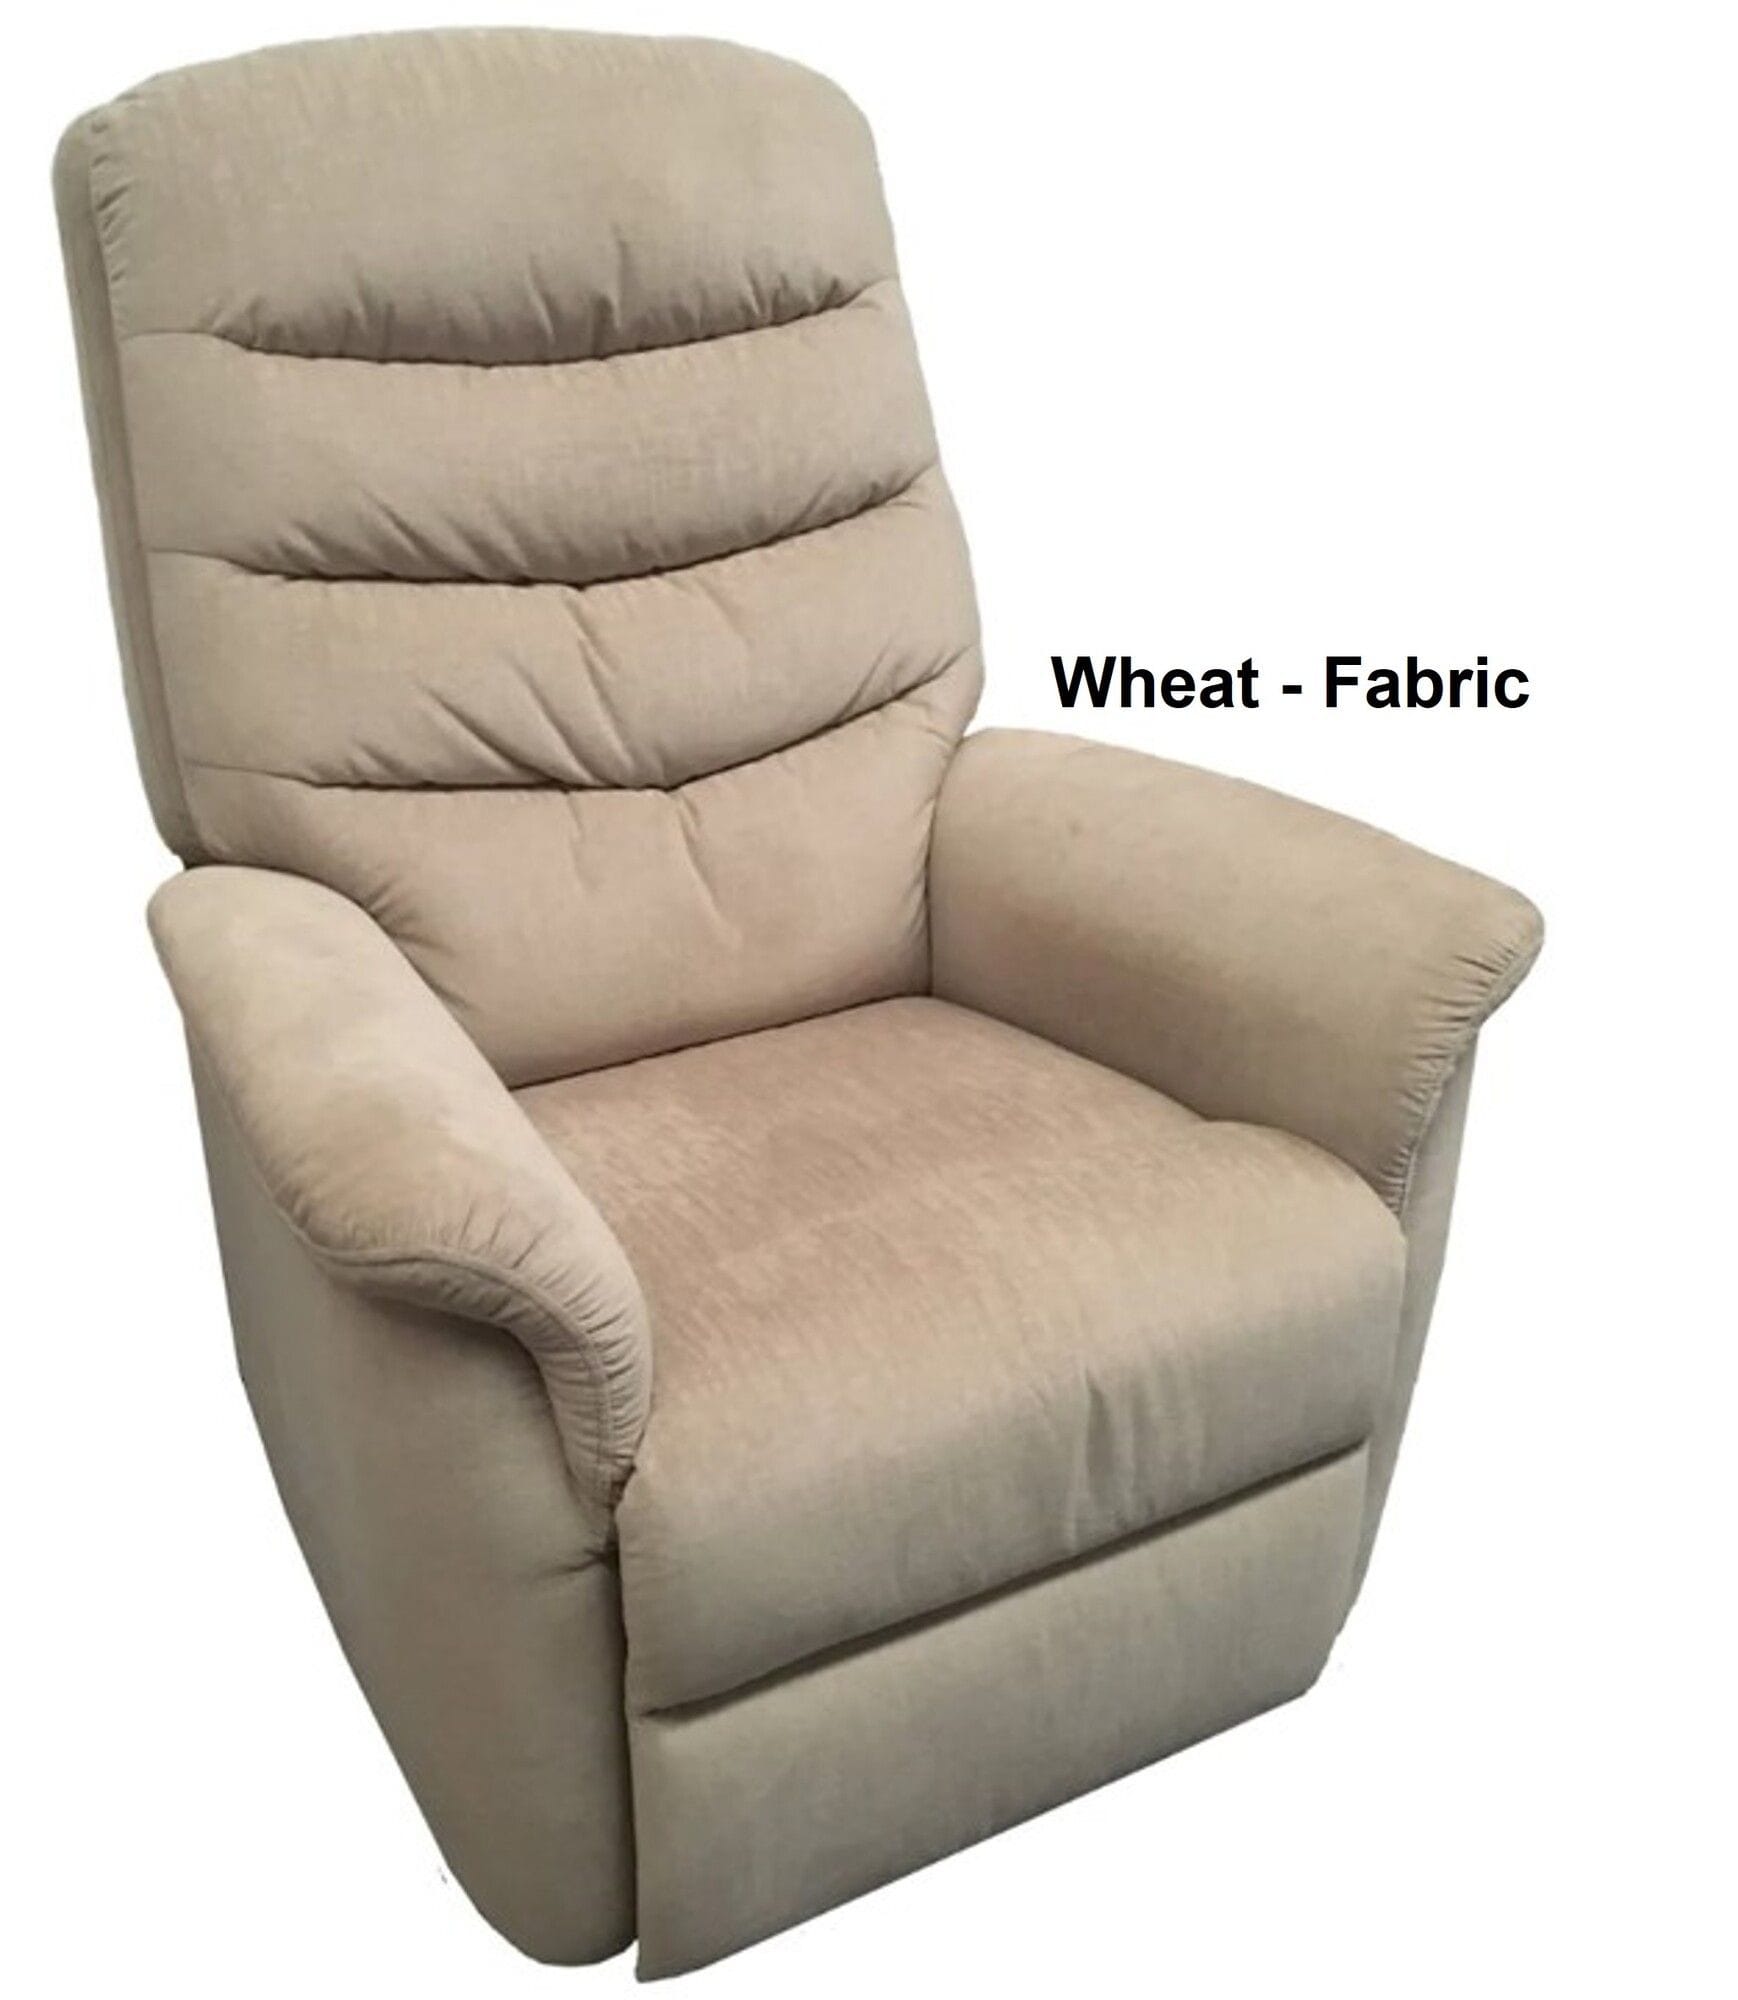 Studio Fabric Lift Chair - Standard